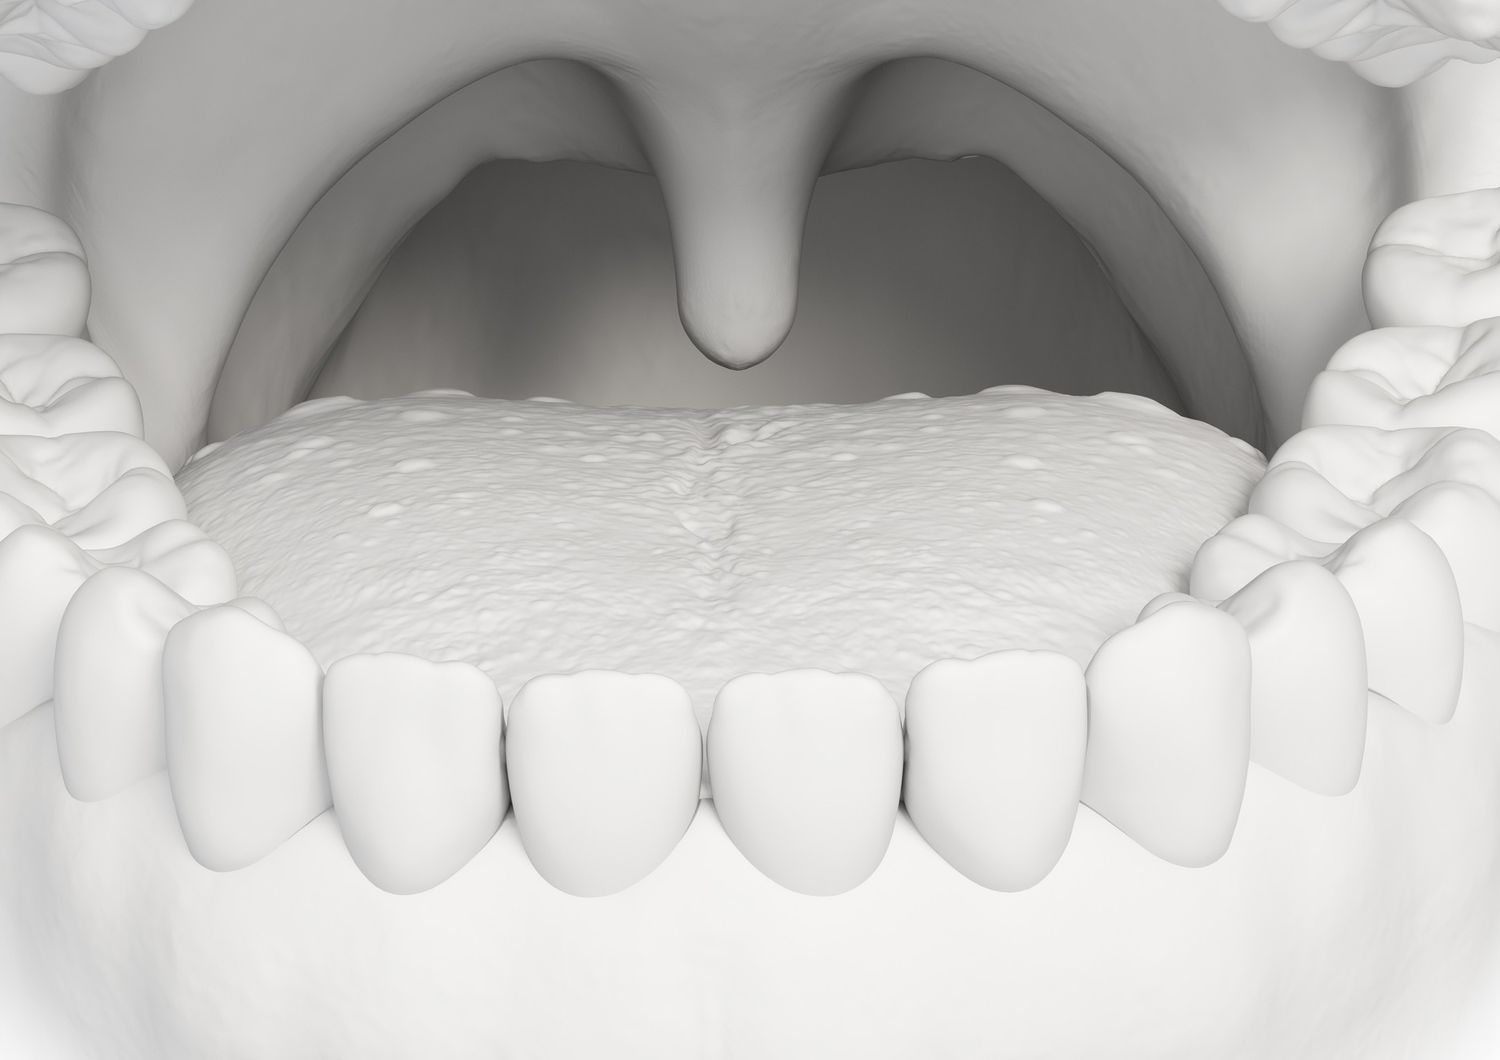 scoperte nuove ghiandole salivari gola